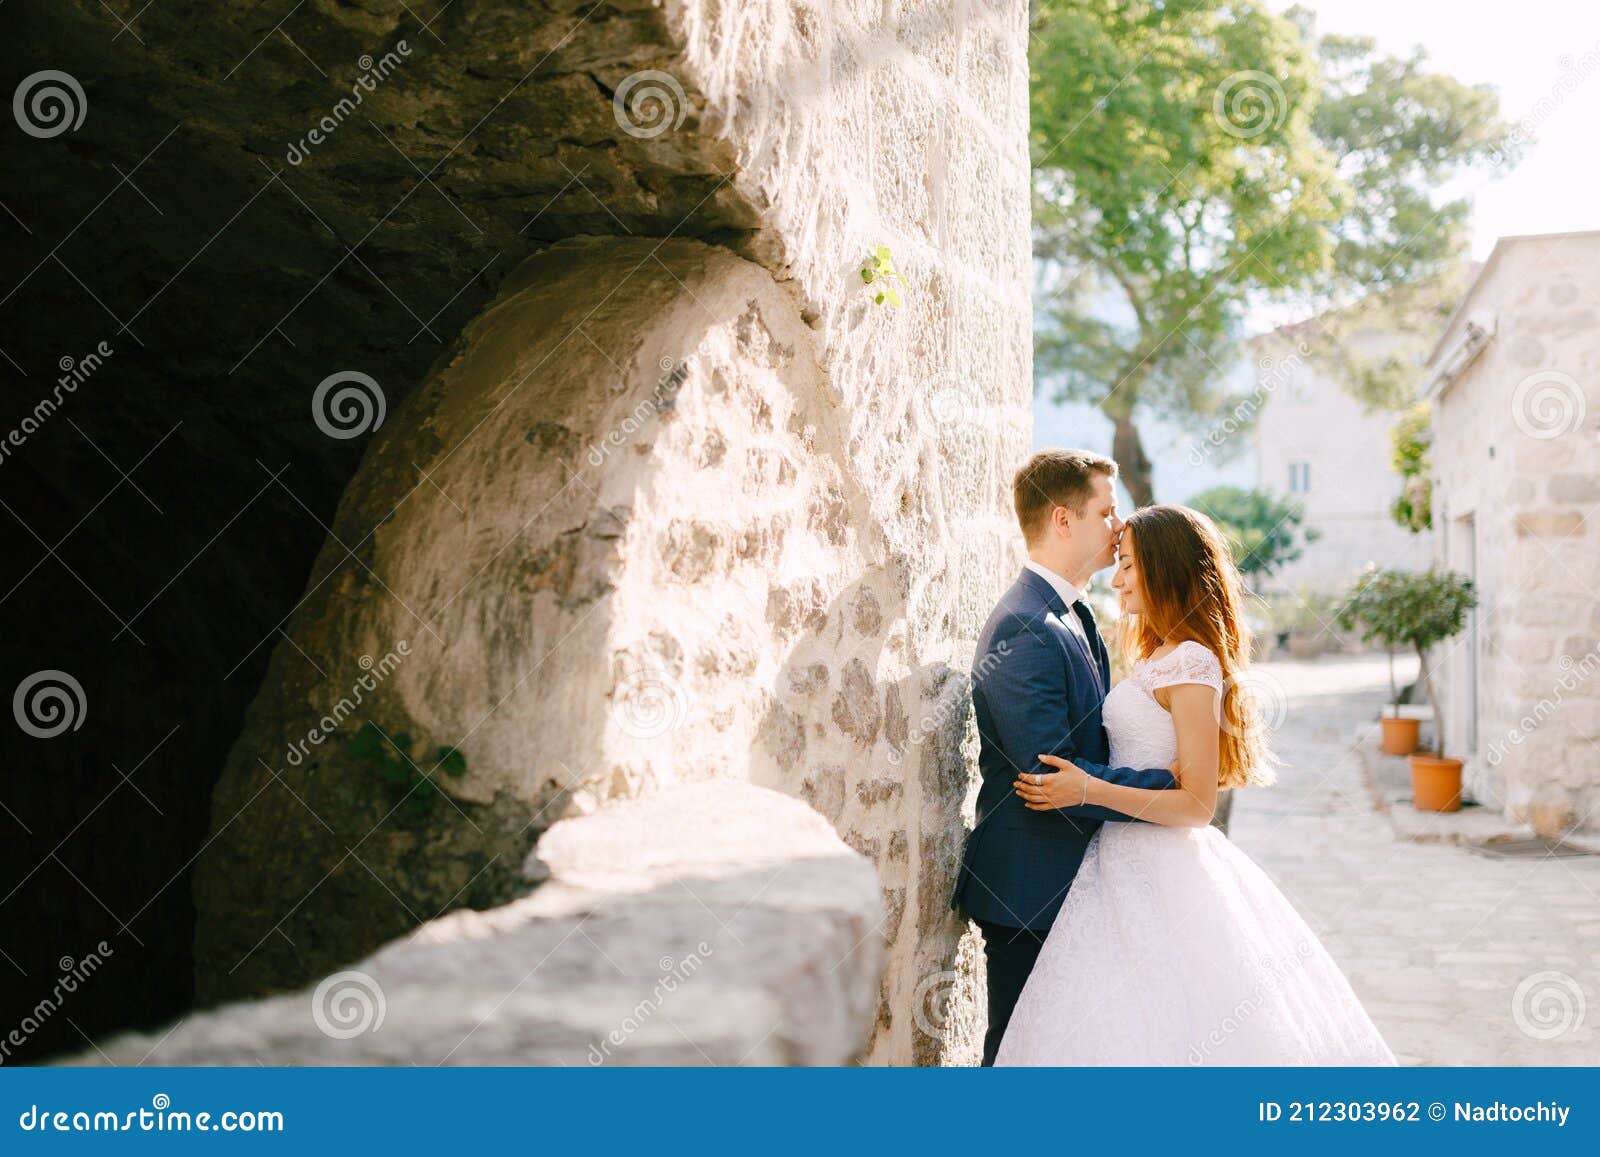 https://thumbs.dreamstime.com/z/bride-groom-hug-beautiful-old-street-perast-kisses-forehead-high-quality-photo-212303962.jpg